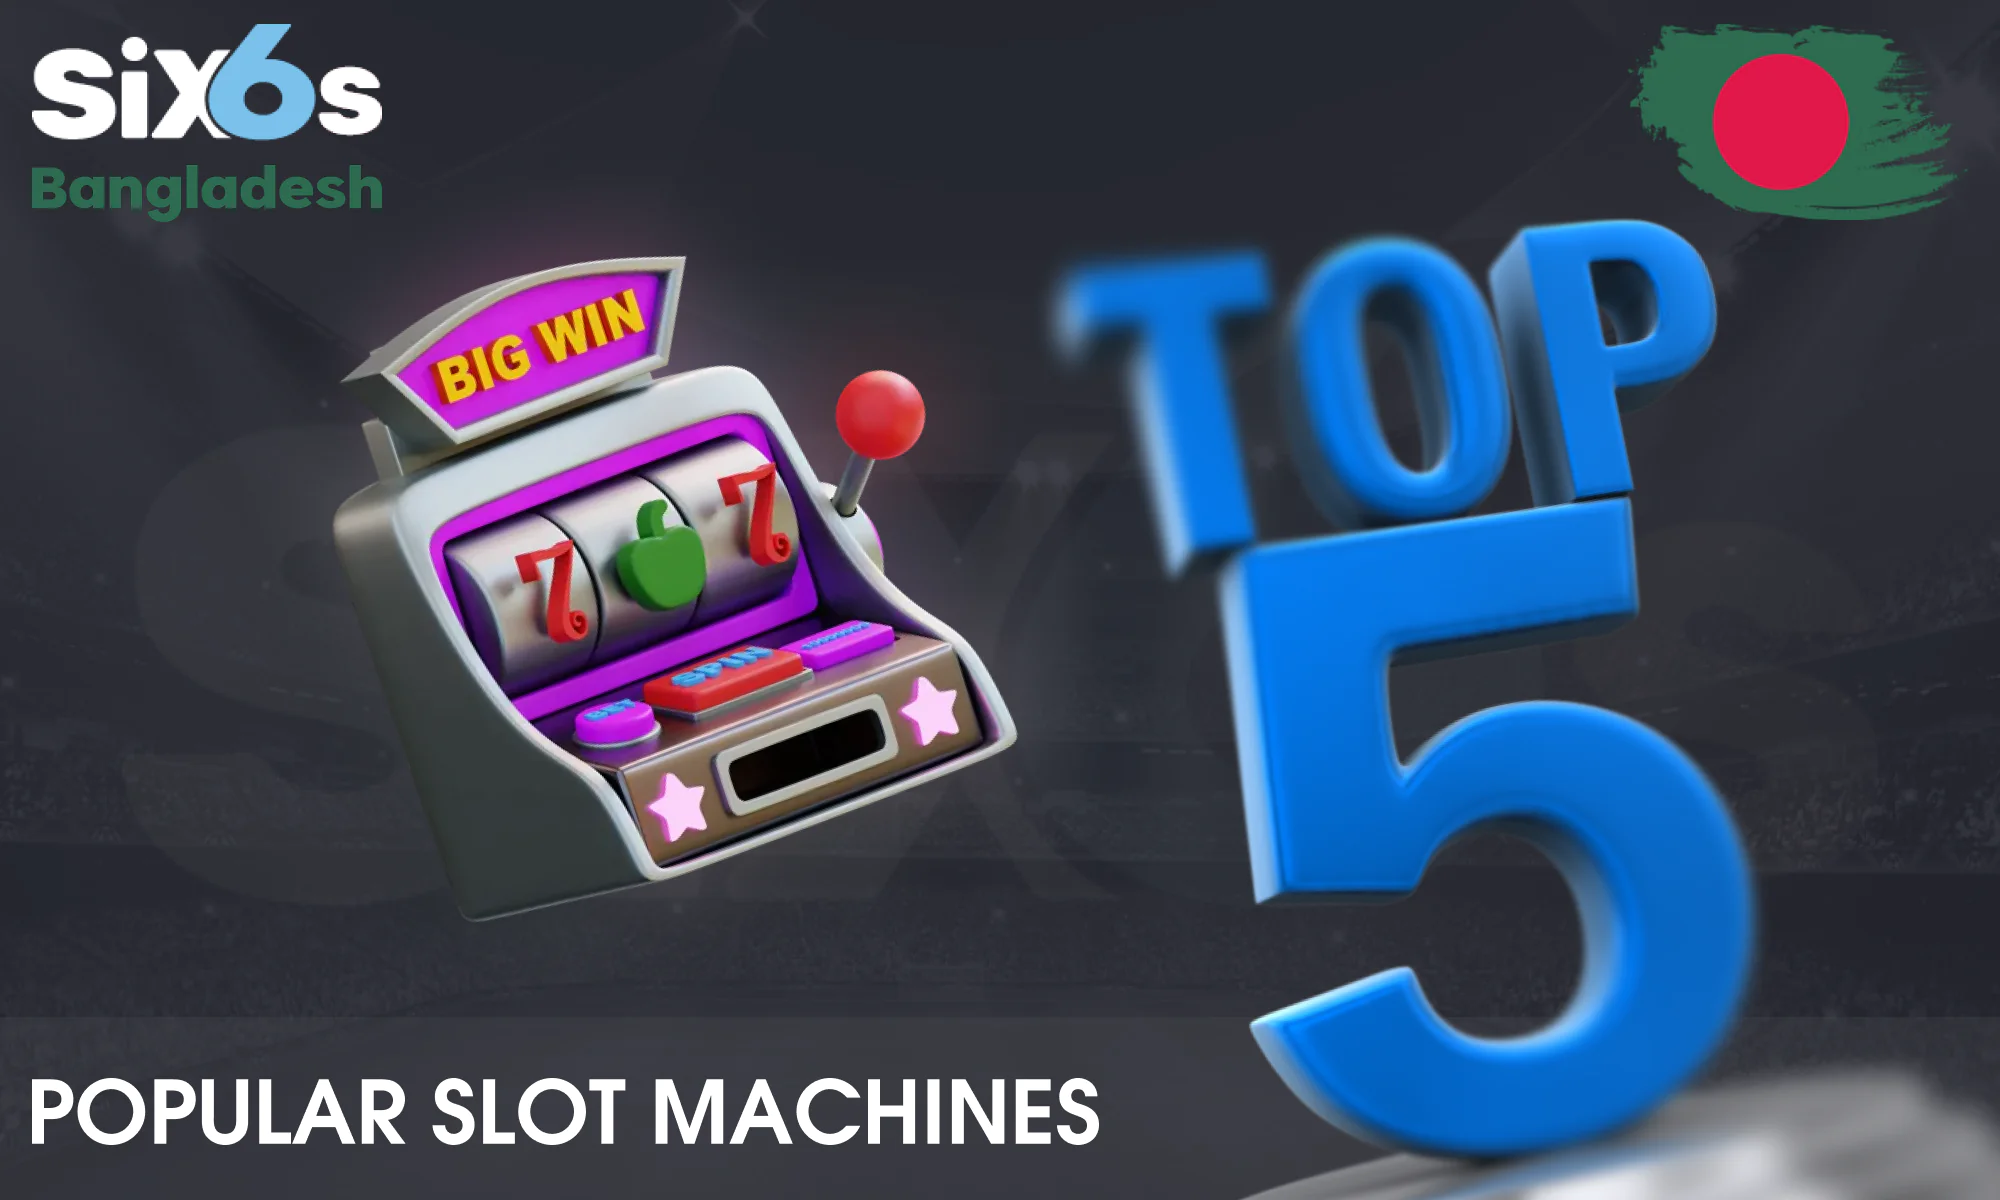 Popular Slot machines among Bangladeshi users